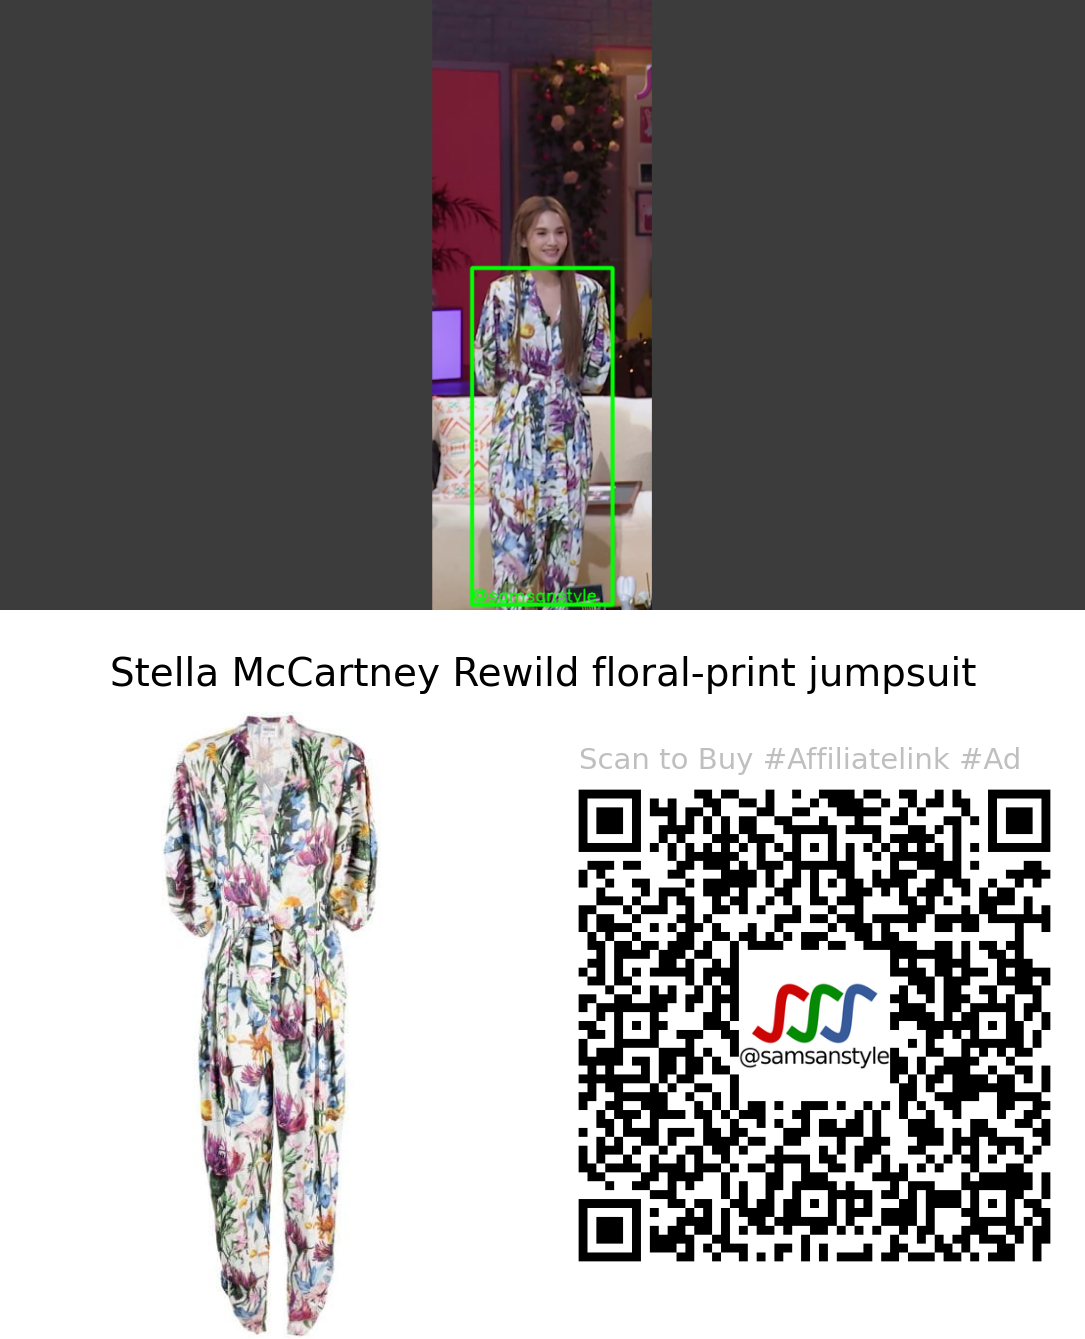 Rainie Yang | Heart Signal 6 CN S06E07 | Stella McCartney Rewild floral-print jumpsuit